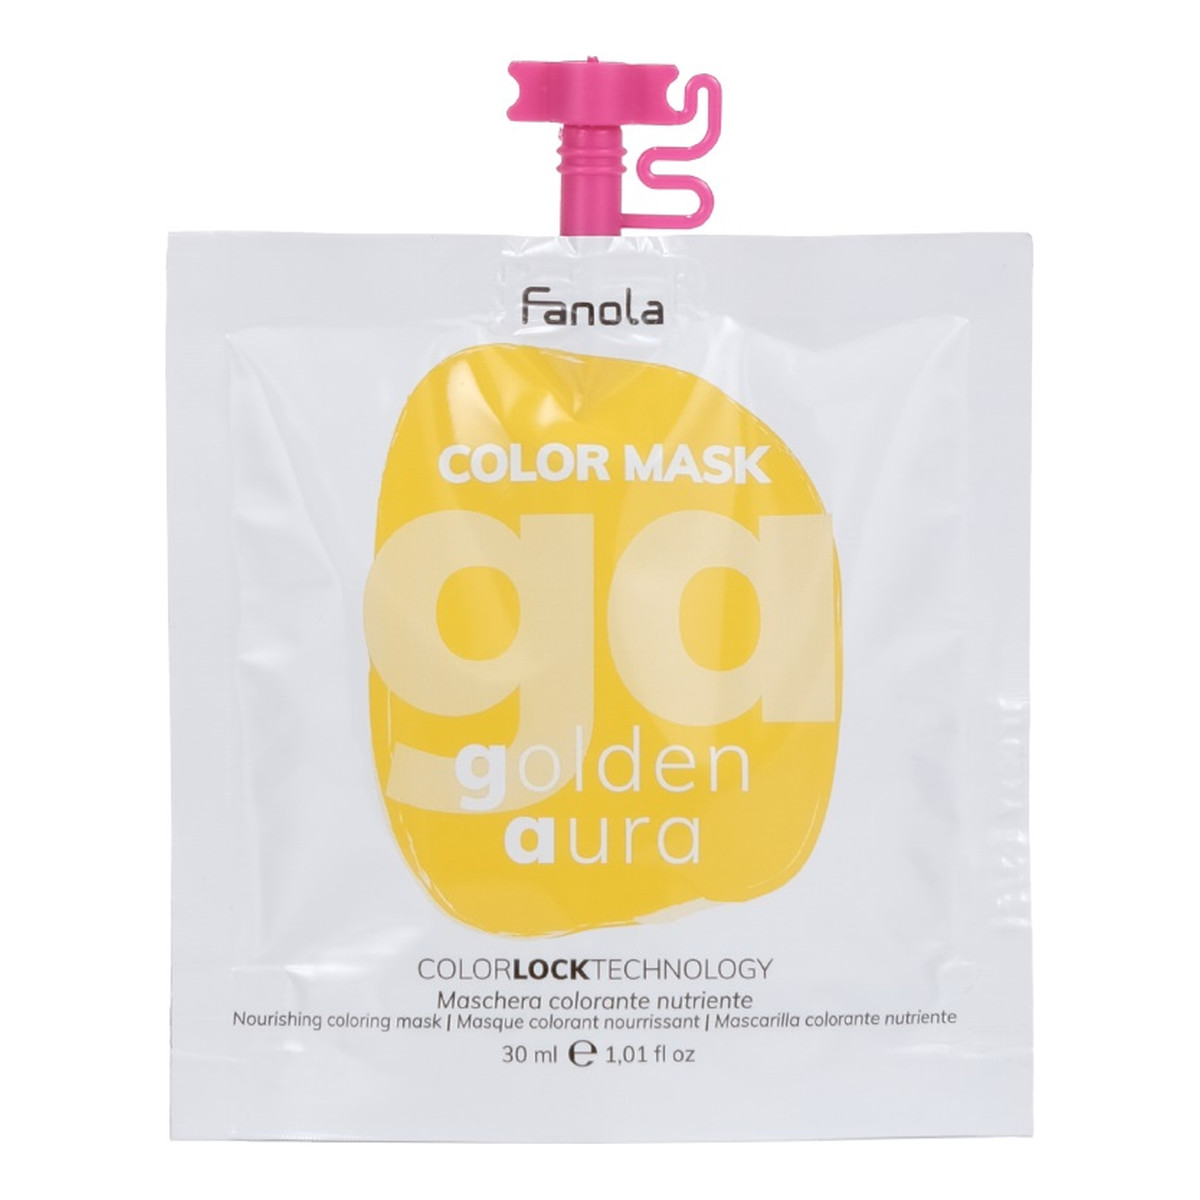 Fanola Color mask maska koloryzująca do włosów golden aura 30ml